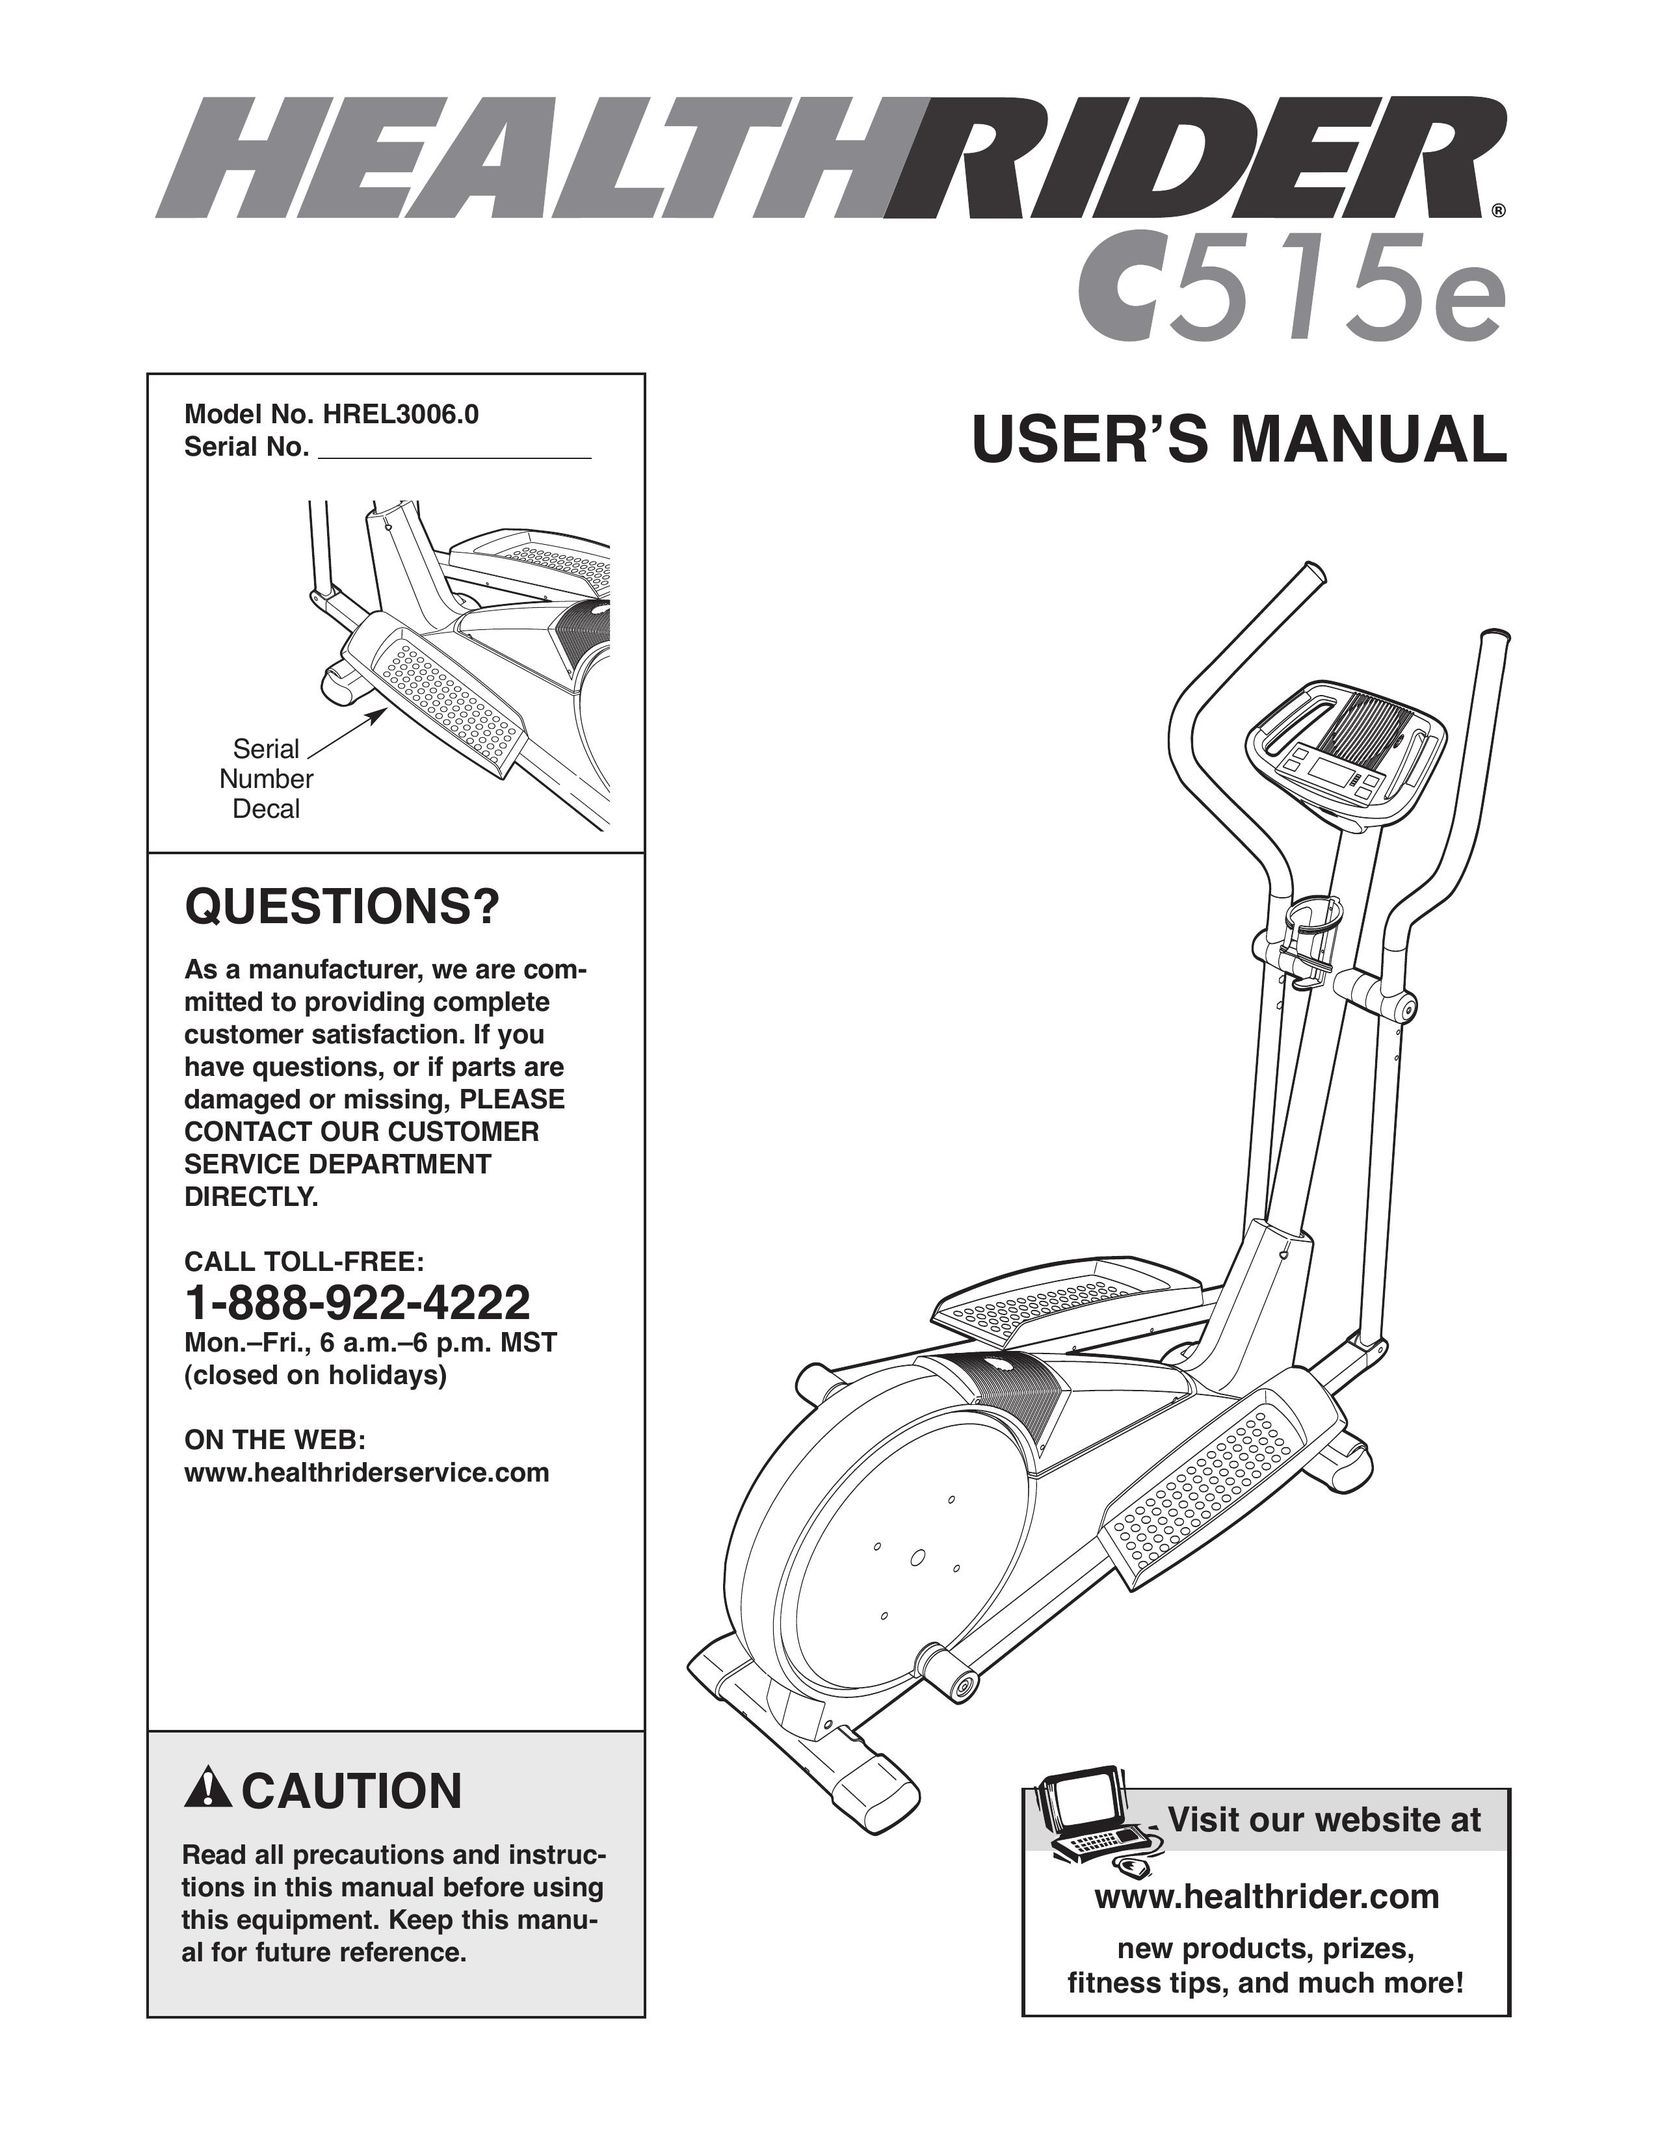 Healthrider HREL3006.0 Home Gym User Manual